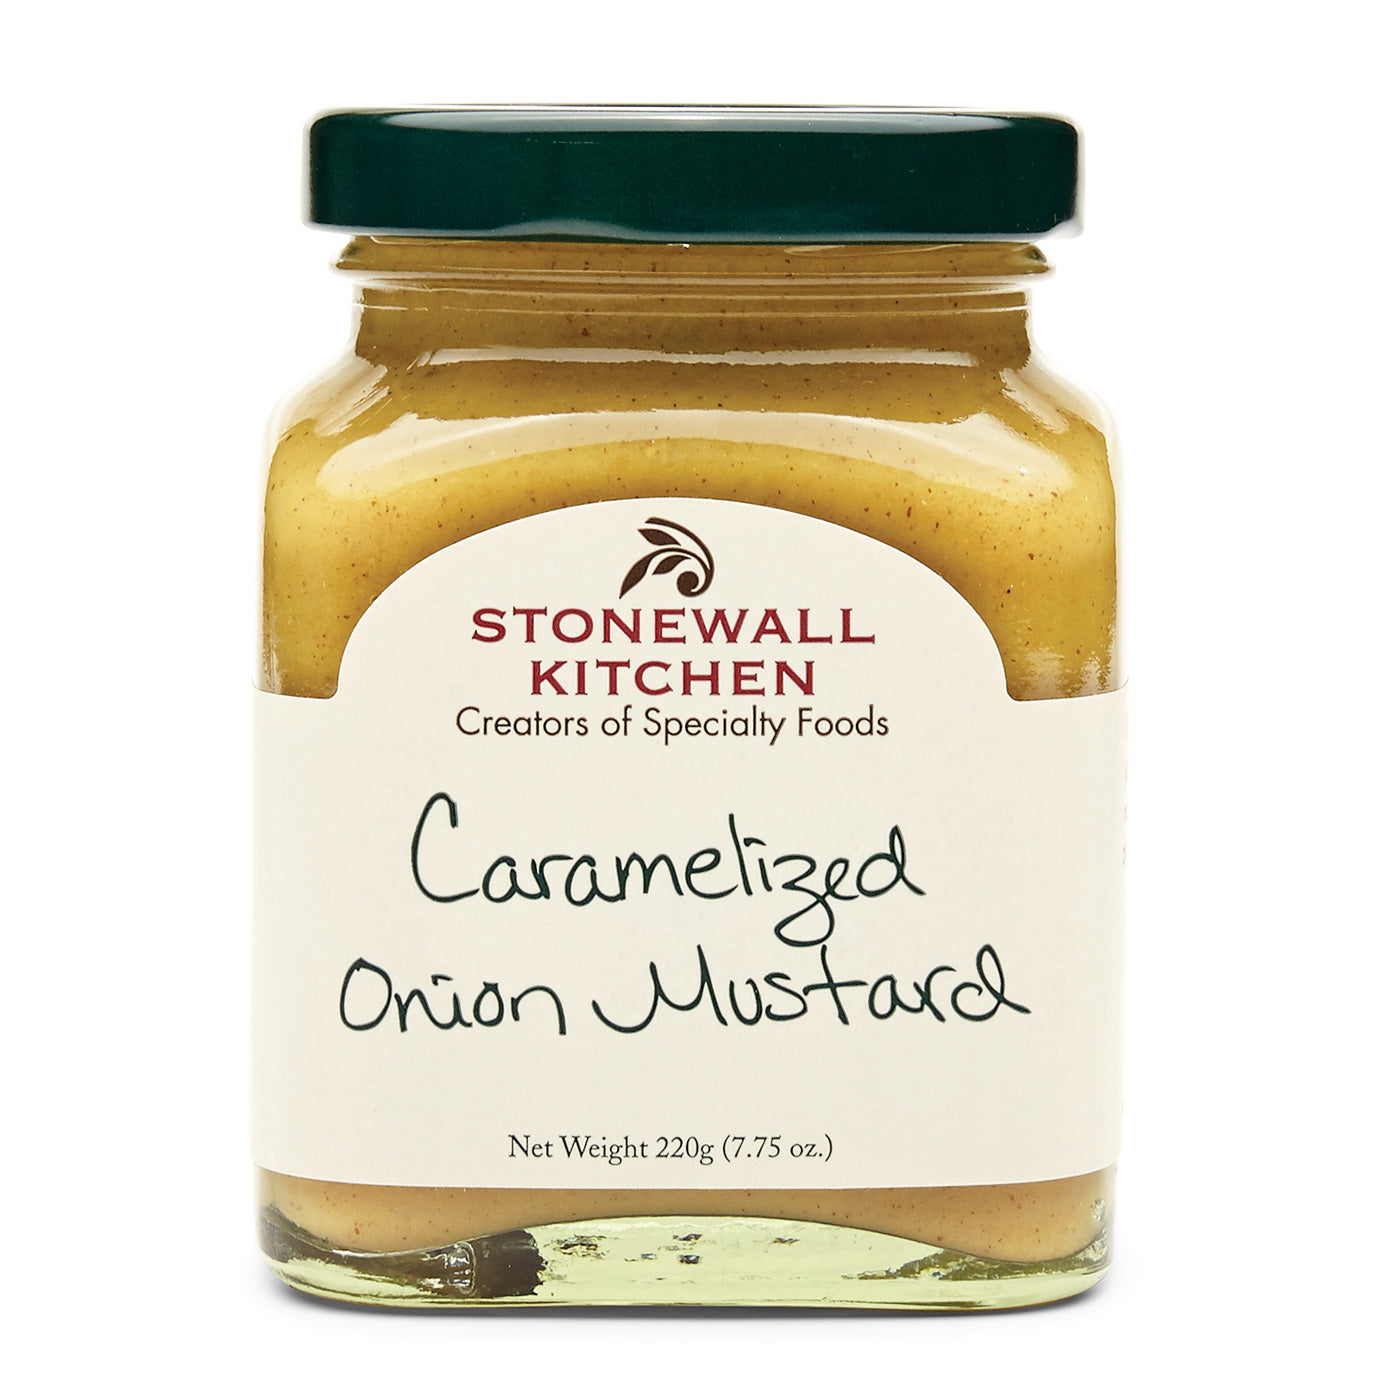 Stonewall Kitchen Caramelized Onion Mustard - Olive Oil Etcetera 